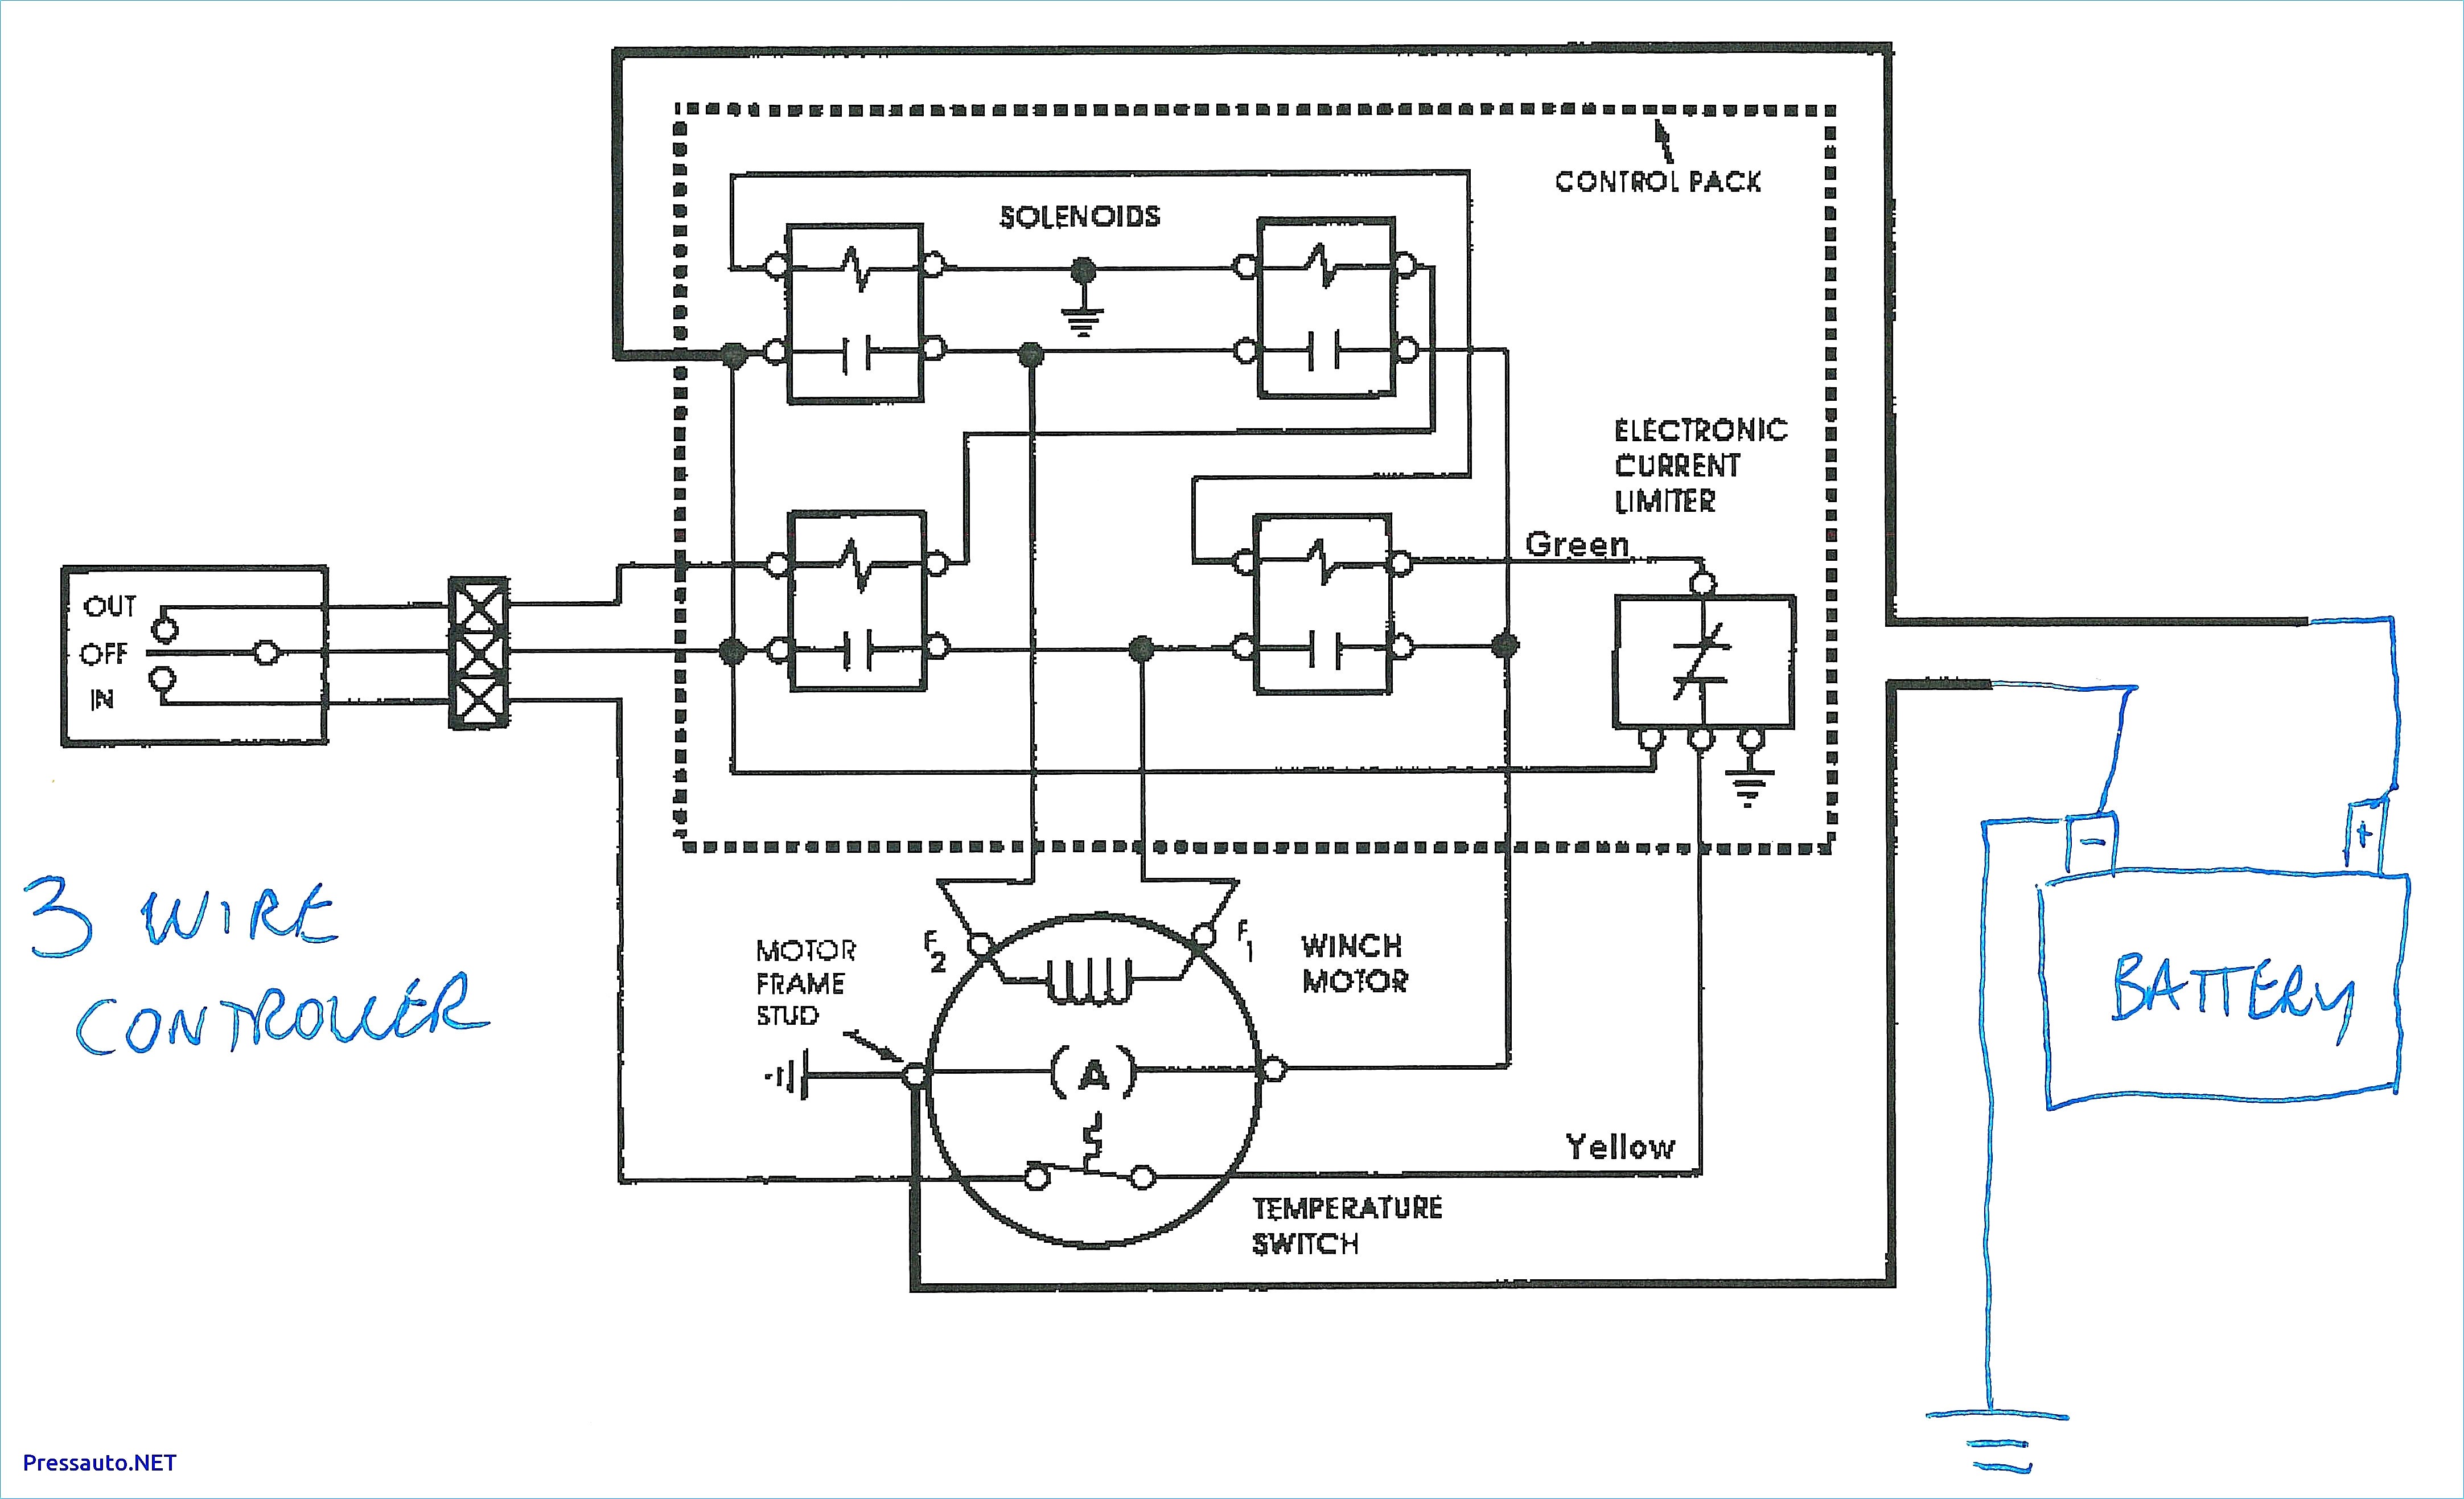 traveller caravan wiring diagram wiring diagram Guitar Wiring Diagrams traveller caravan wiring diagram wiring library6 pin